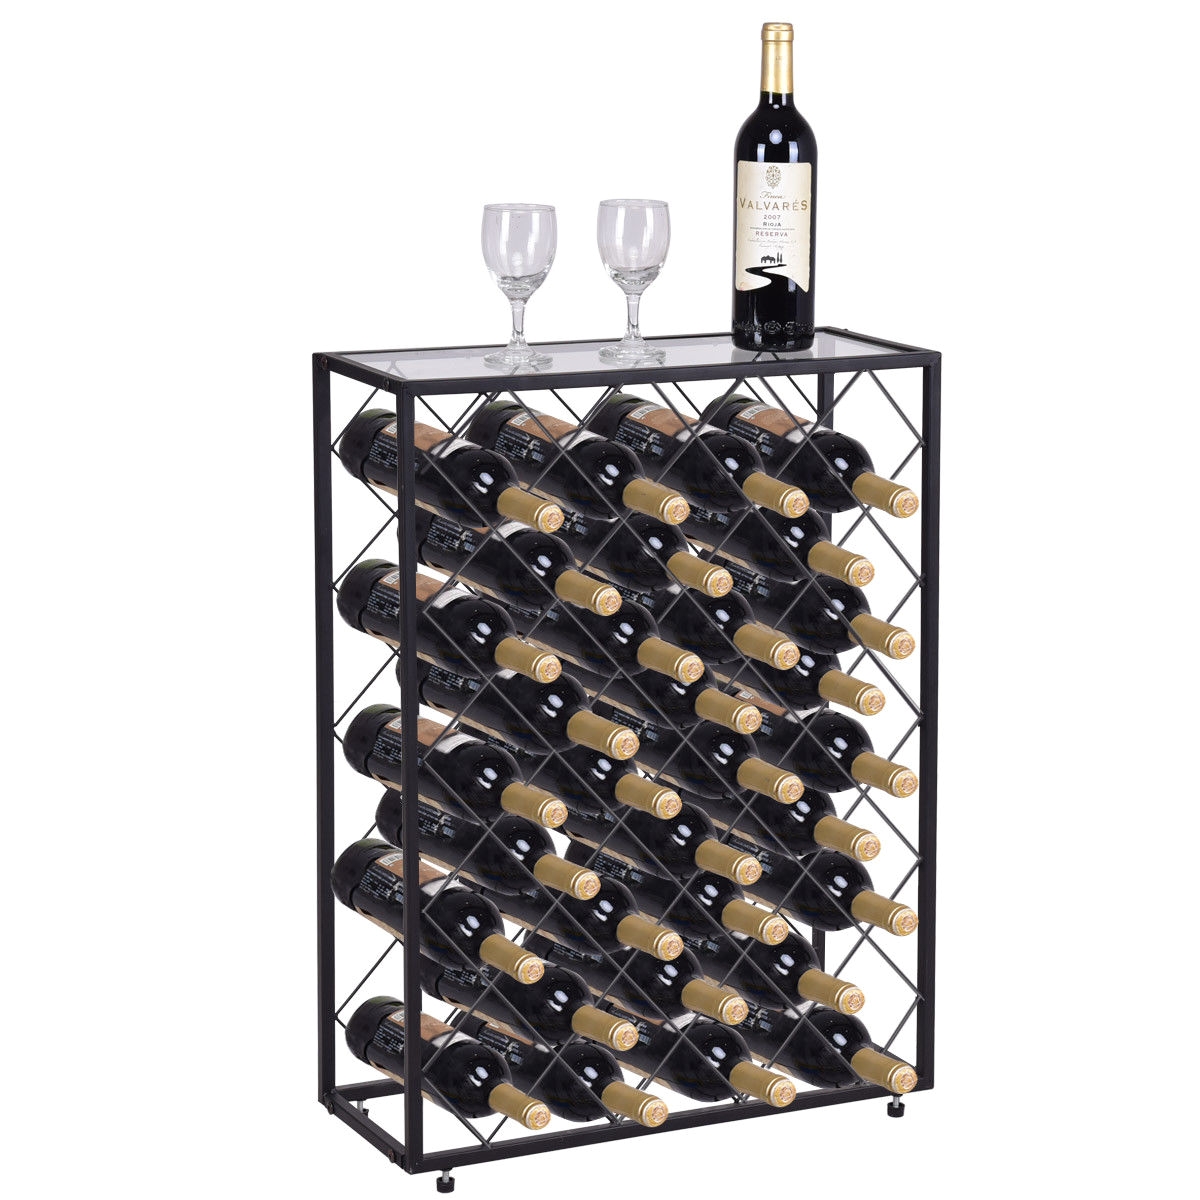 gymax 32 bottle wine rack metal storage display liquor cabinet w glass table top walmart com